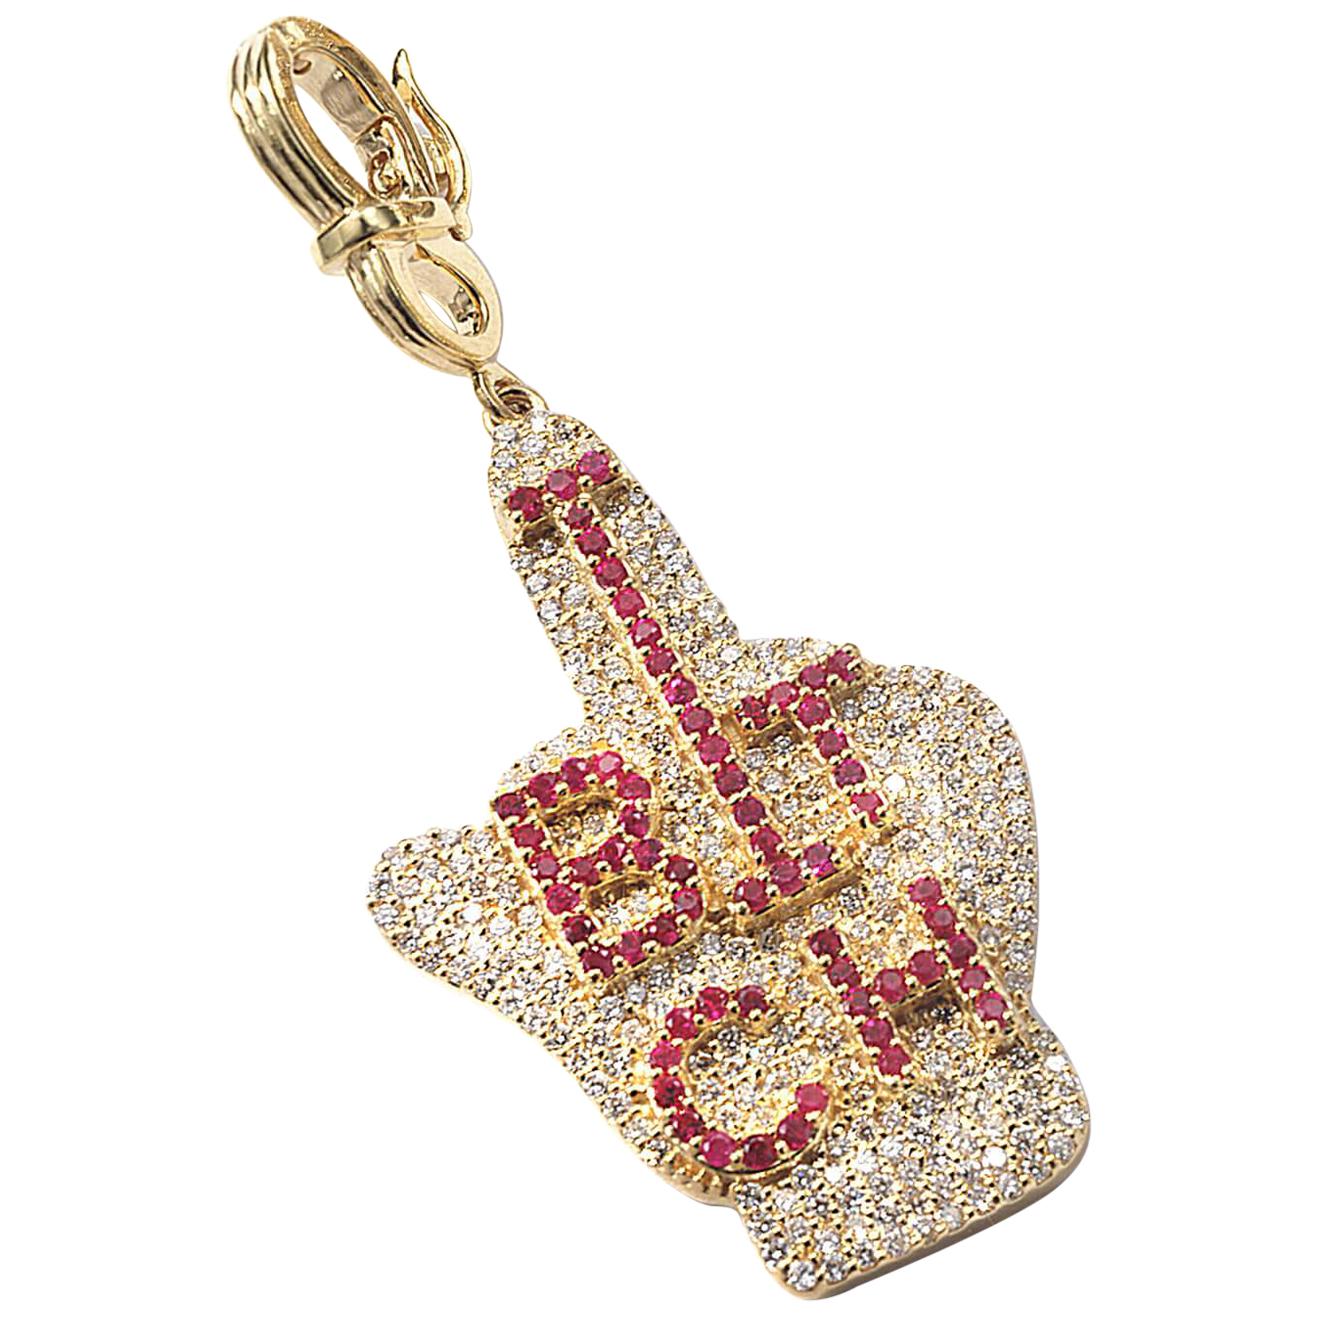 Coomi Uncensored "Bitch" Diamond Pendant Set in 20 Karat Gold